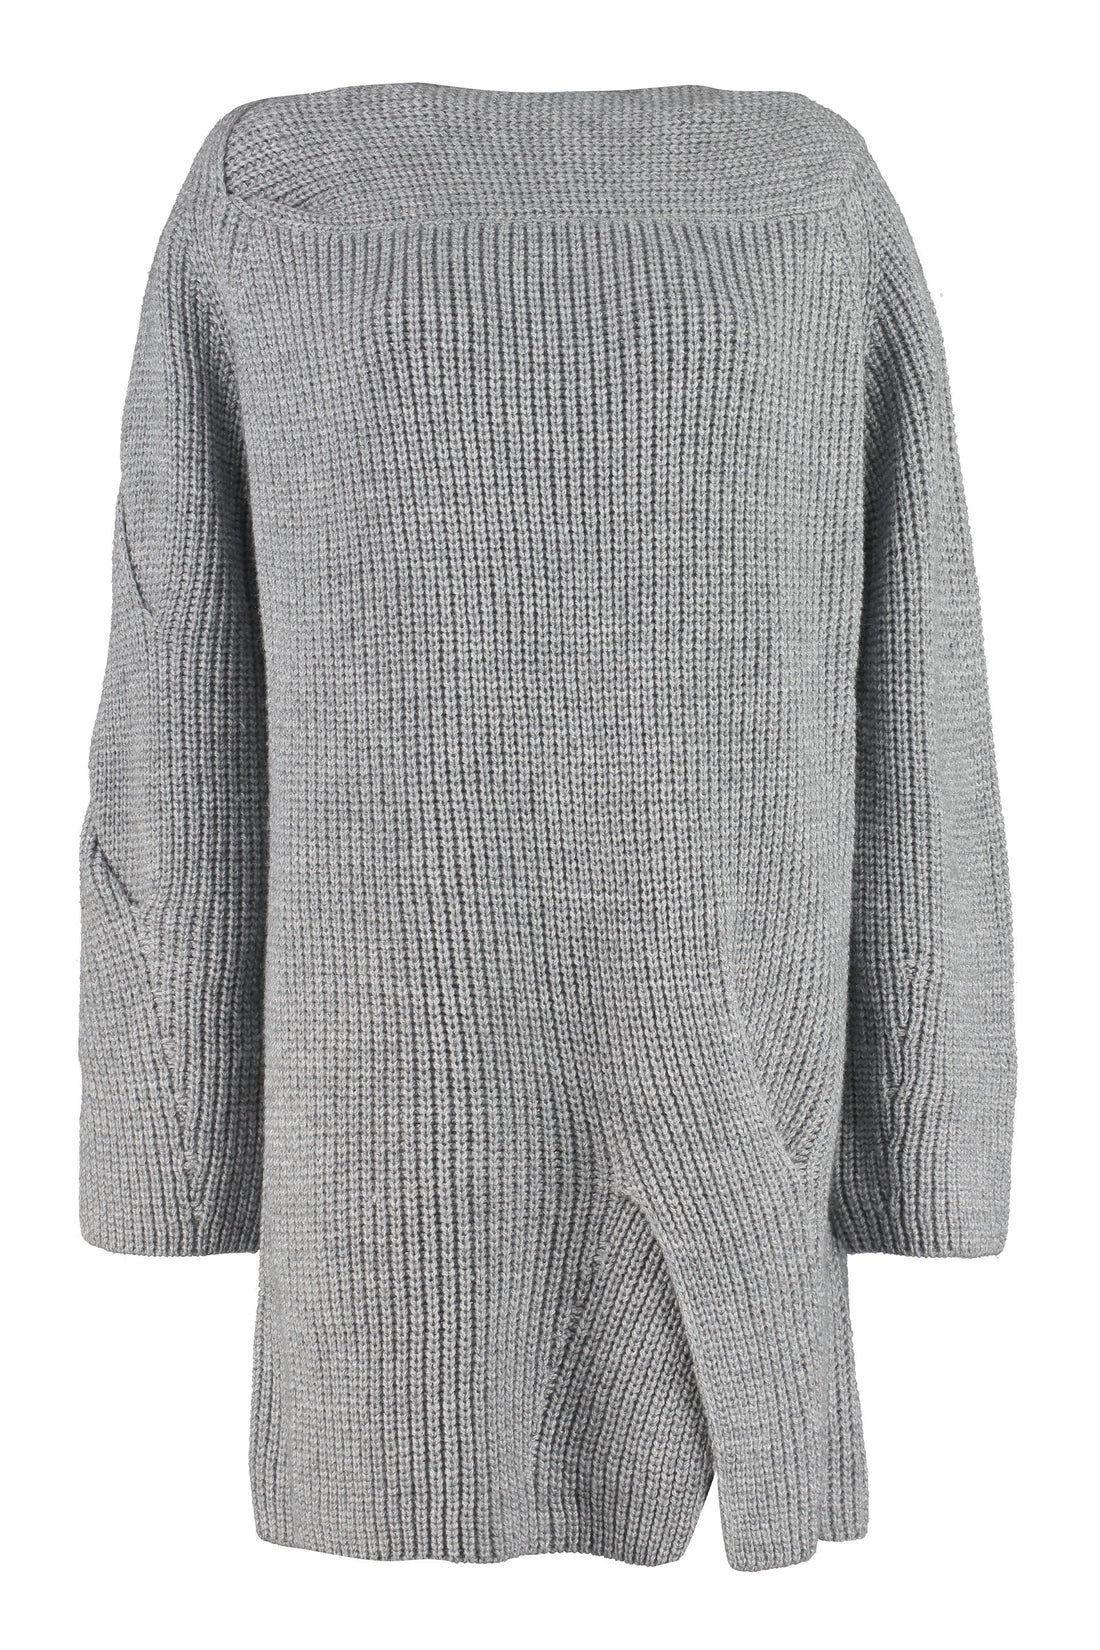 MSGM-OUTLET-SALE-Ribbed knit dress-ARCHIVIST